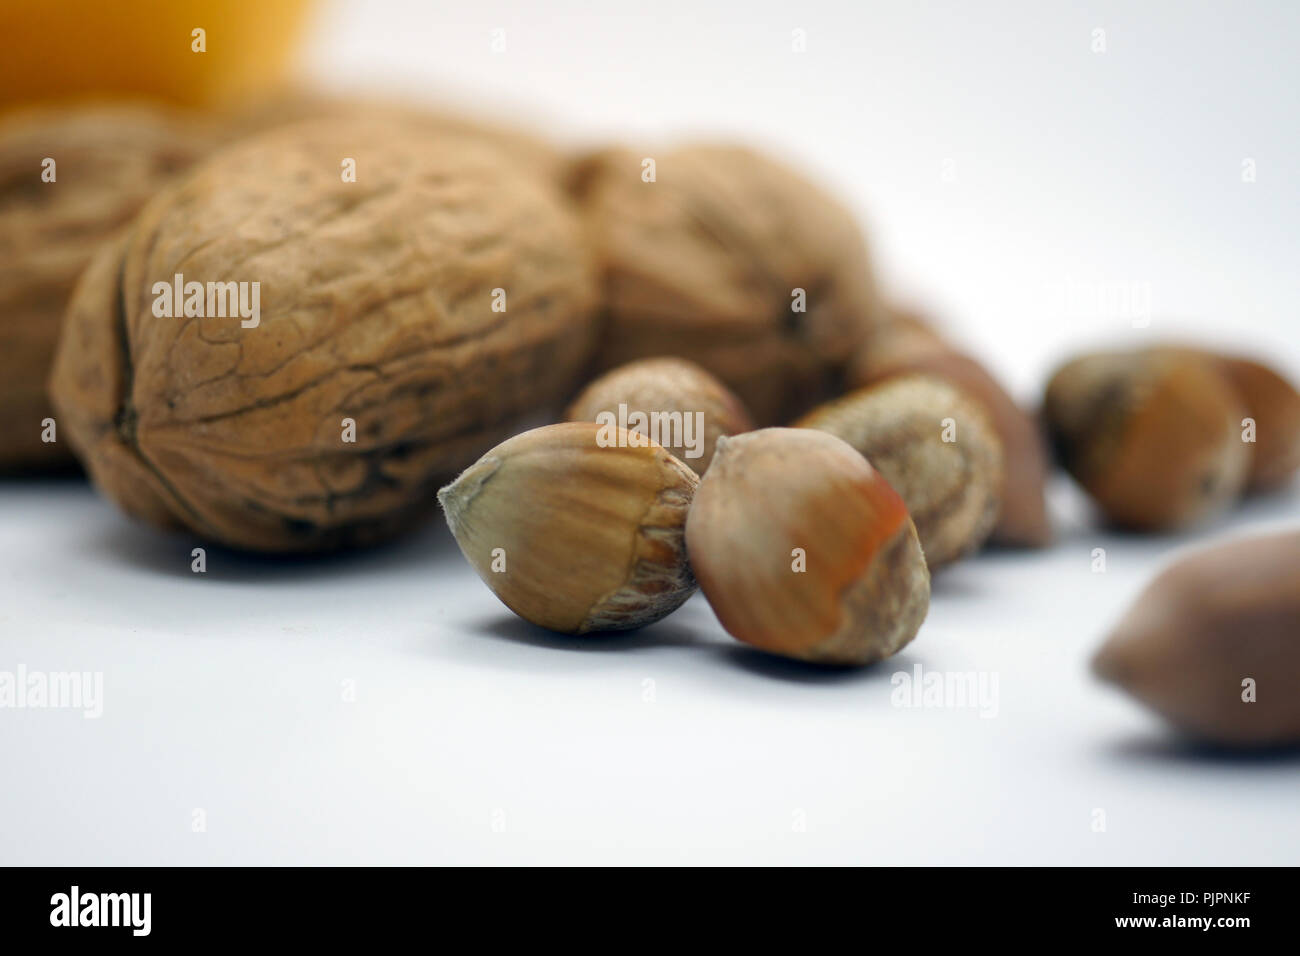 walnuts and hazelnuts Stock Photo